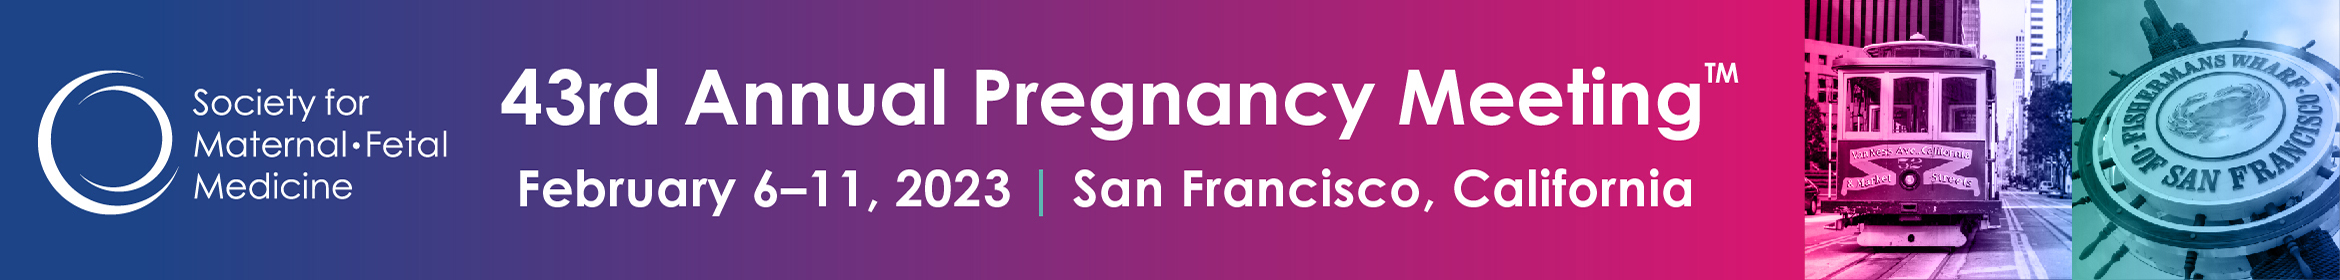 SMFM 43rd Annual Pregnancy Meeting Main banner